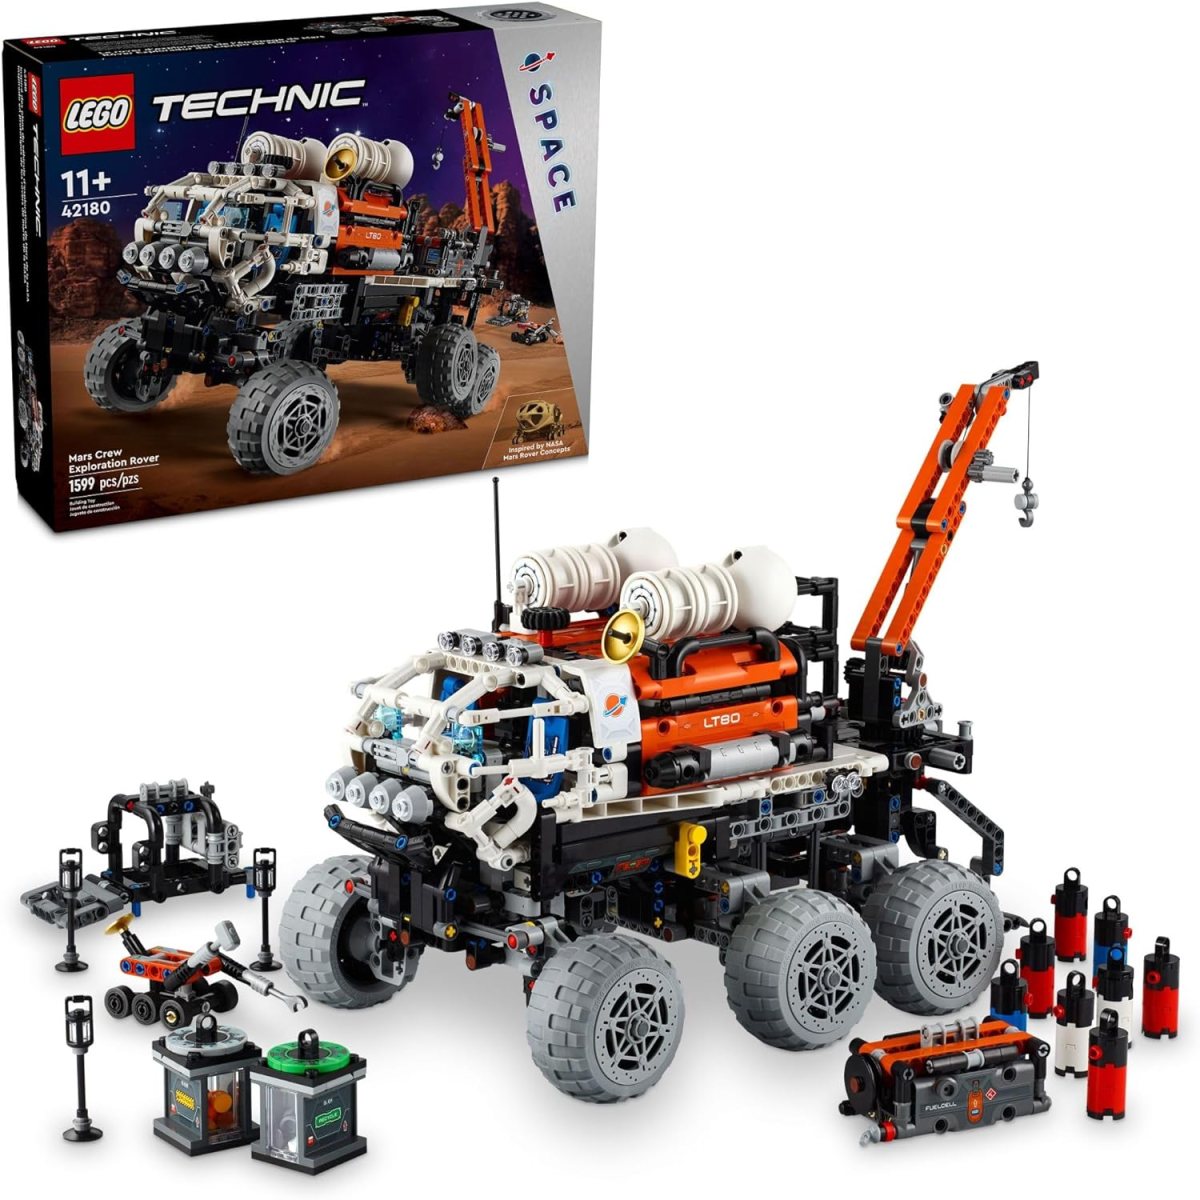 Mars exploration rover LEGO set.